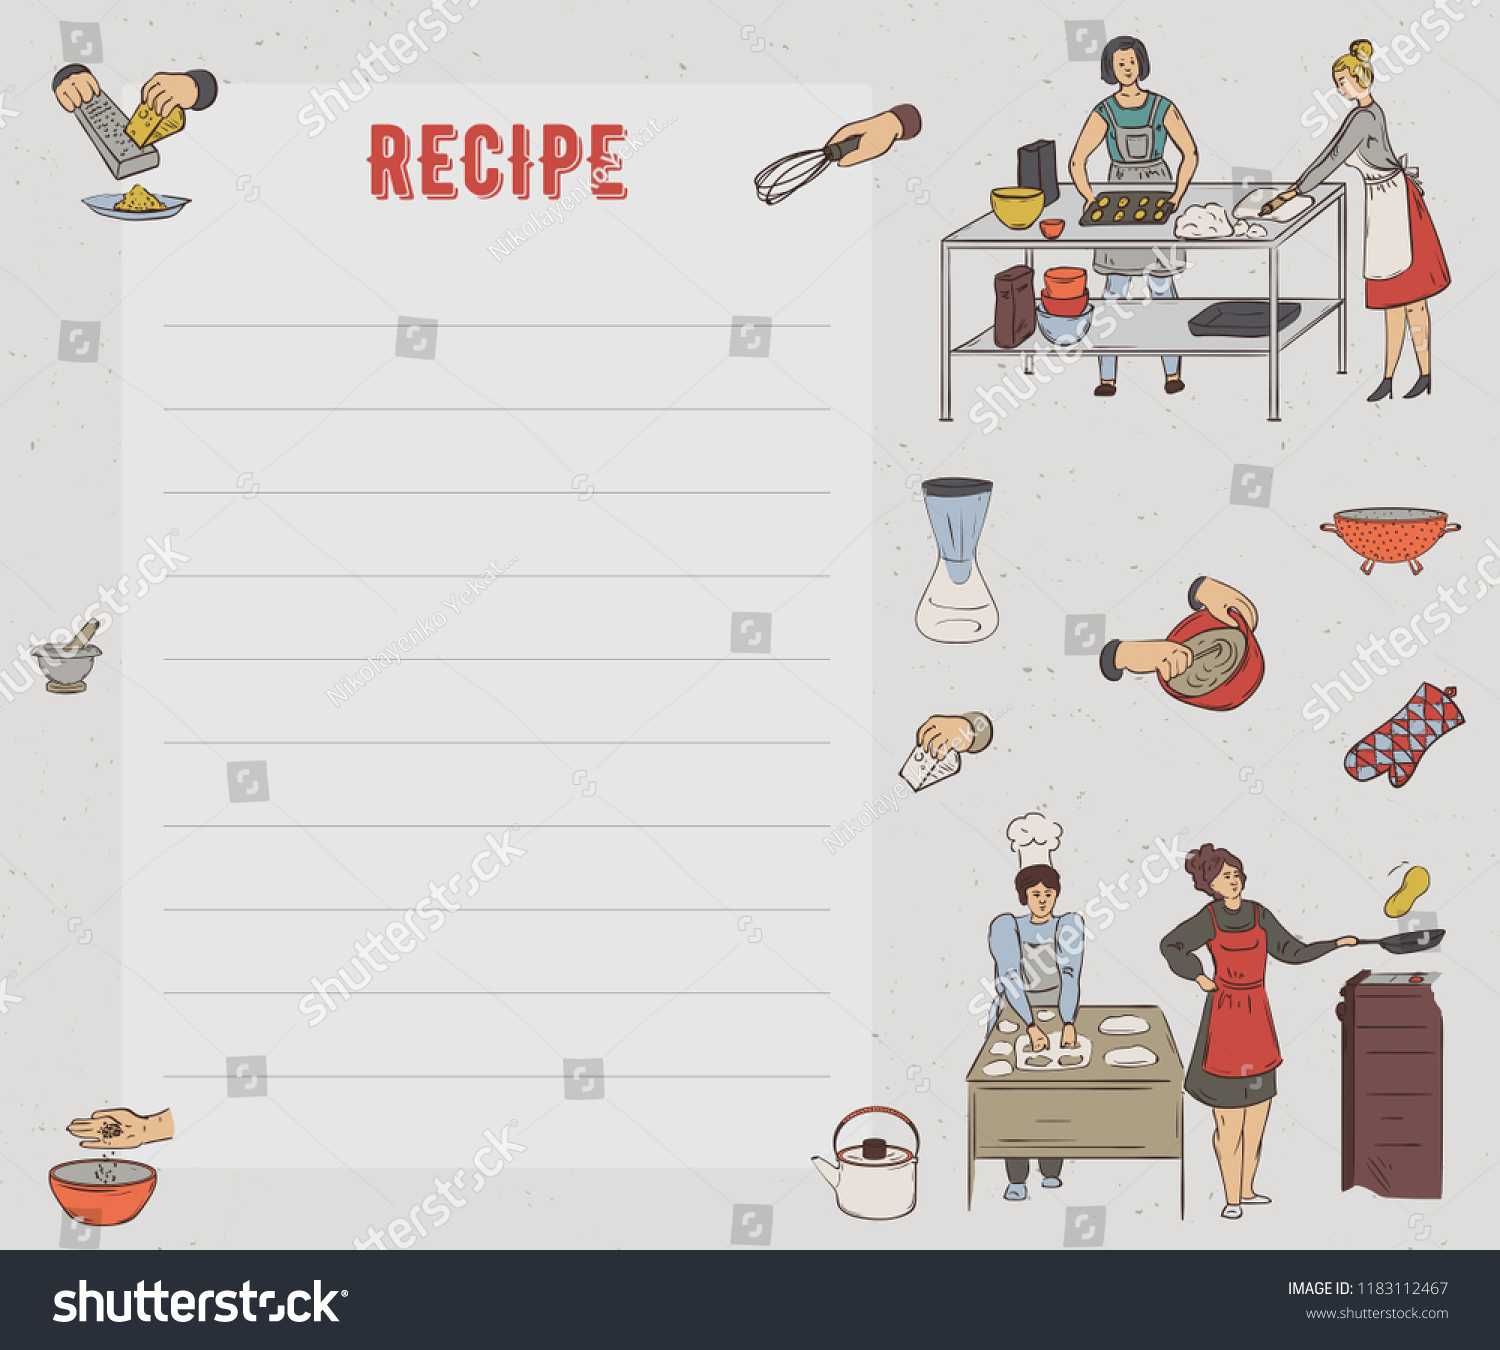 Recipe Card Cookbook Page Design Template Stock Vector With Restaurant Recipe Card Template